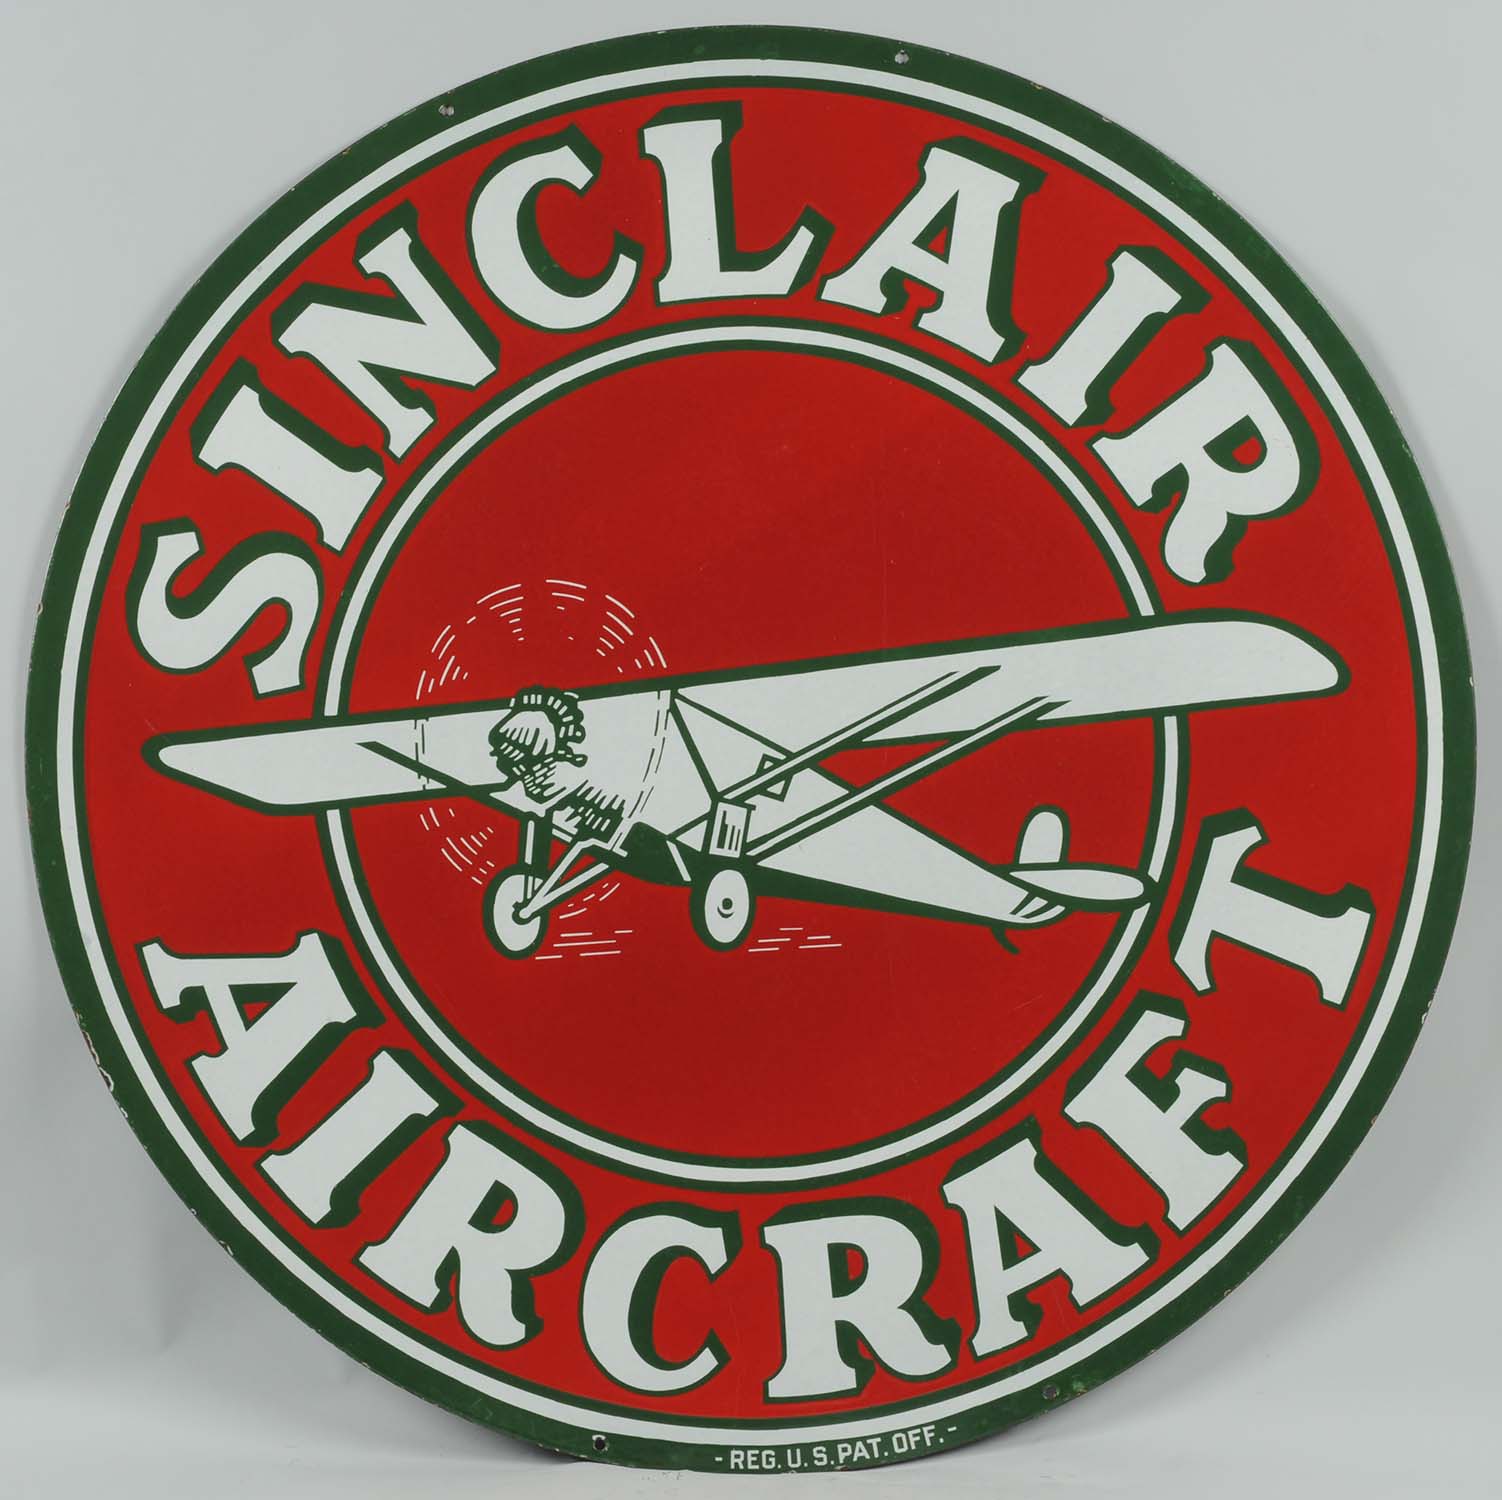 Lot #19, Sinclair Aircraft Porcelain Sign, estimated at $15,000-$20,000.